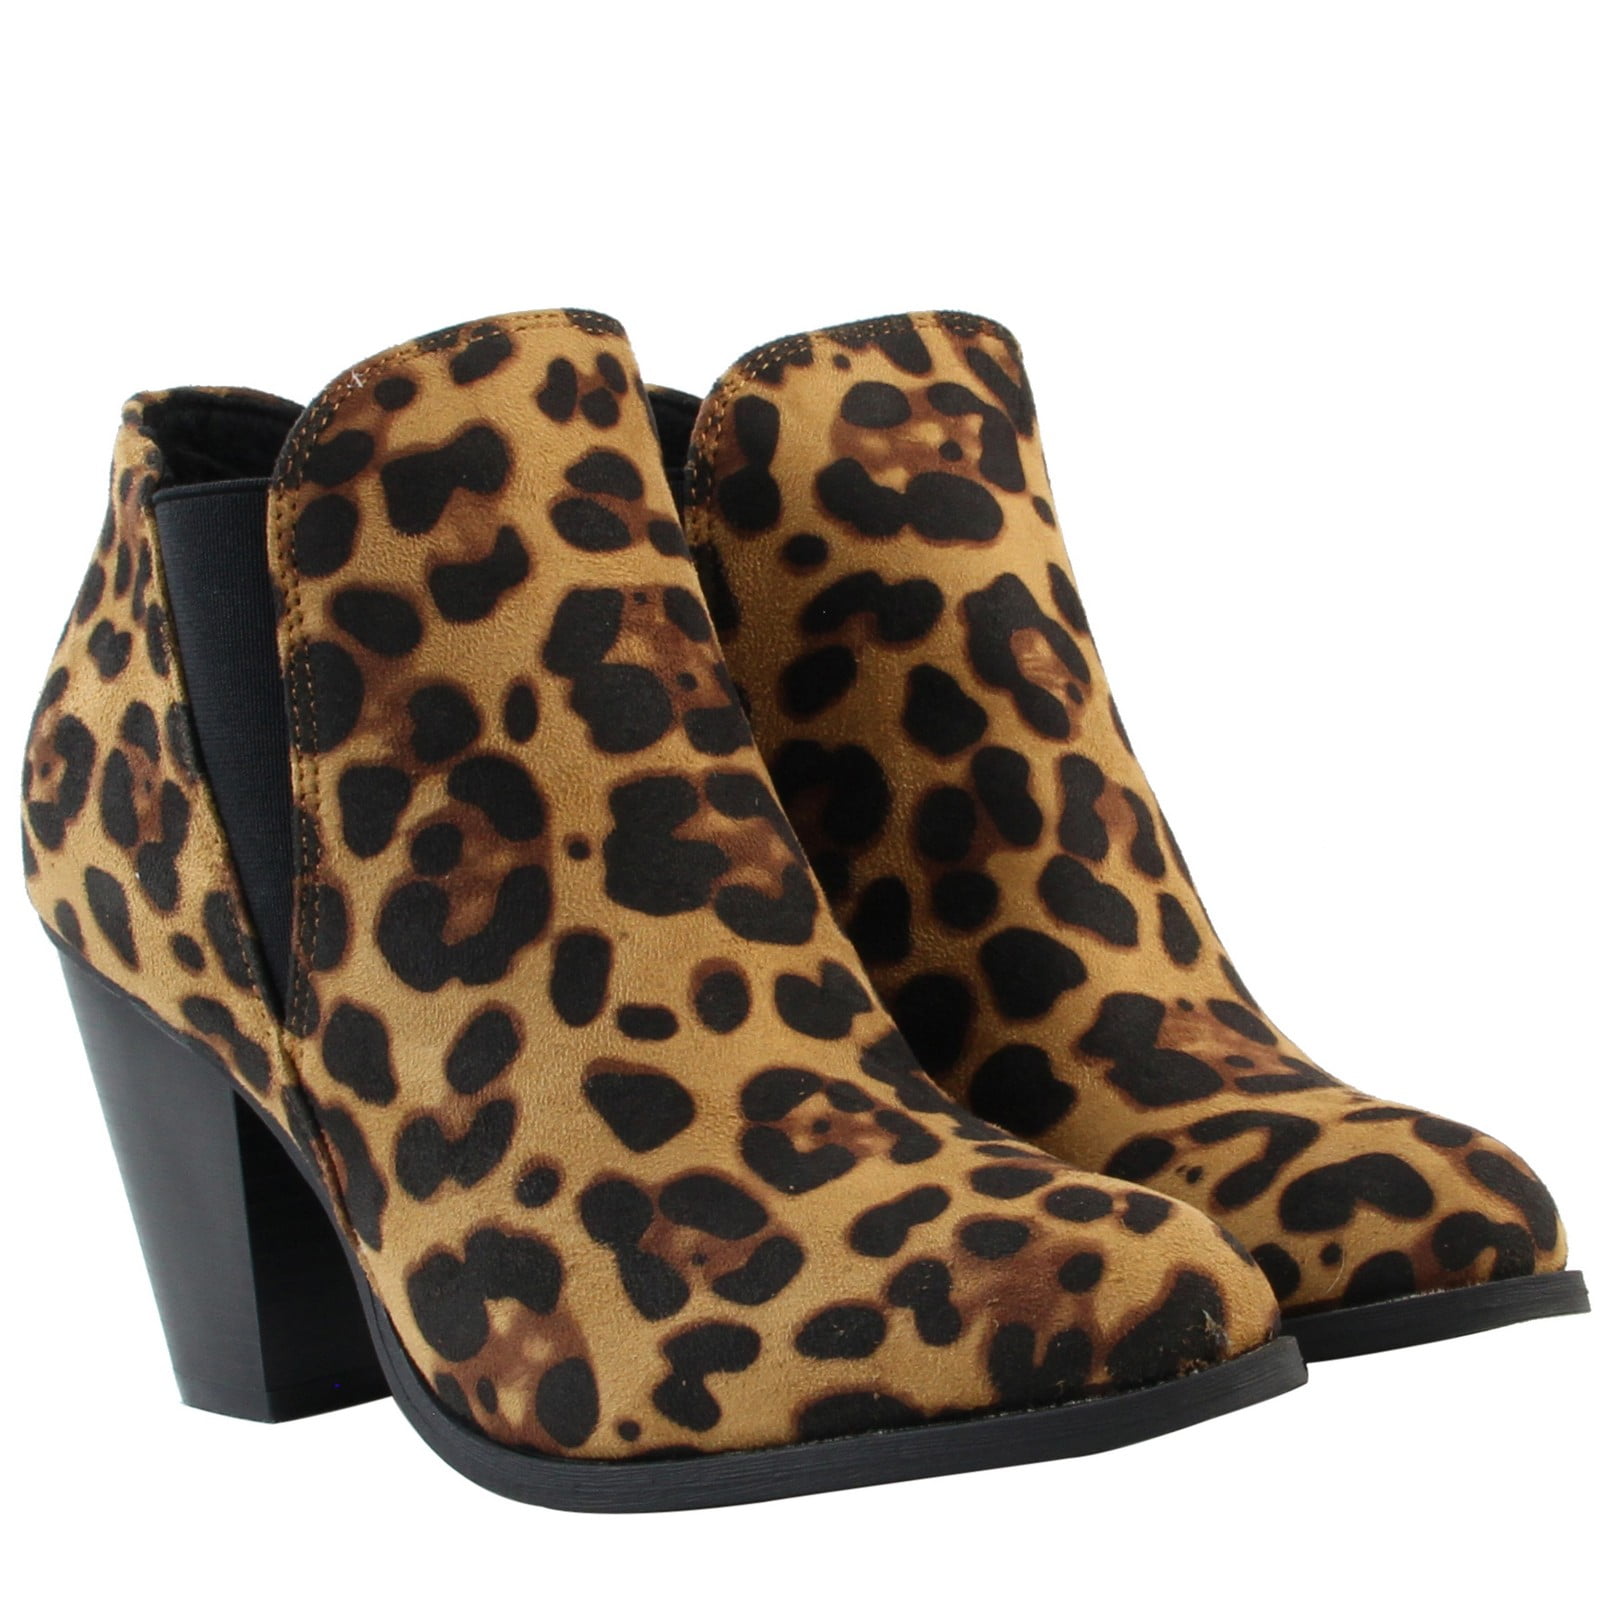 New Women's Leopard Print Chunky Heel Pull On Ankle Boots Chelsea Biker Shoes SZ 